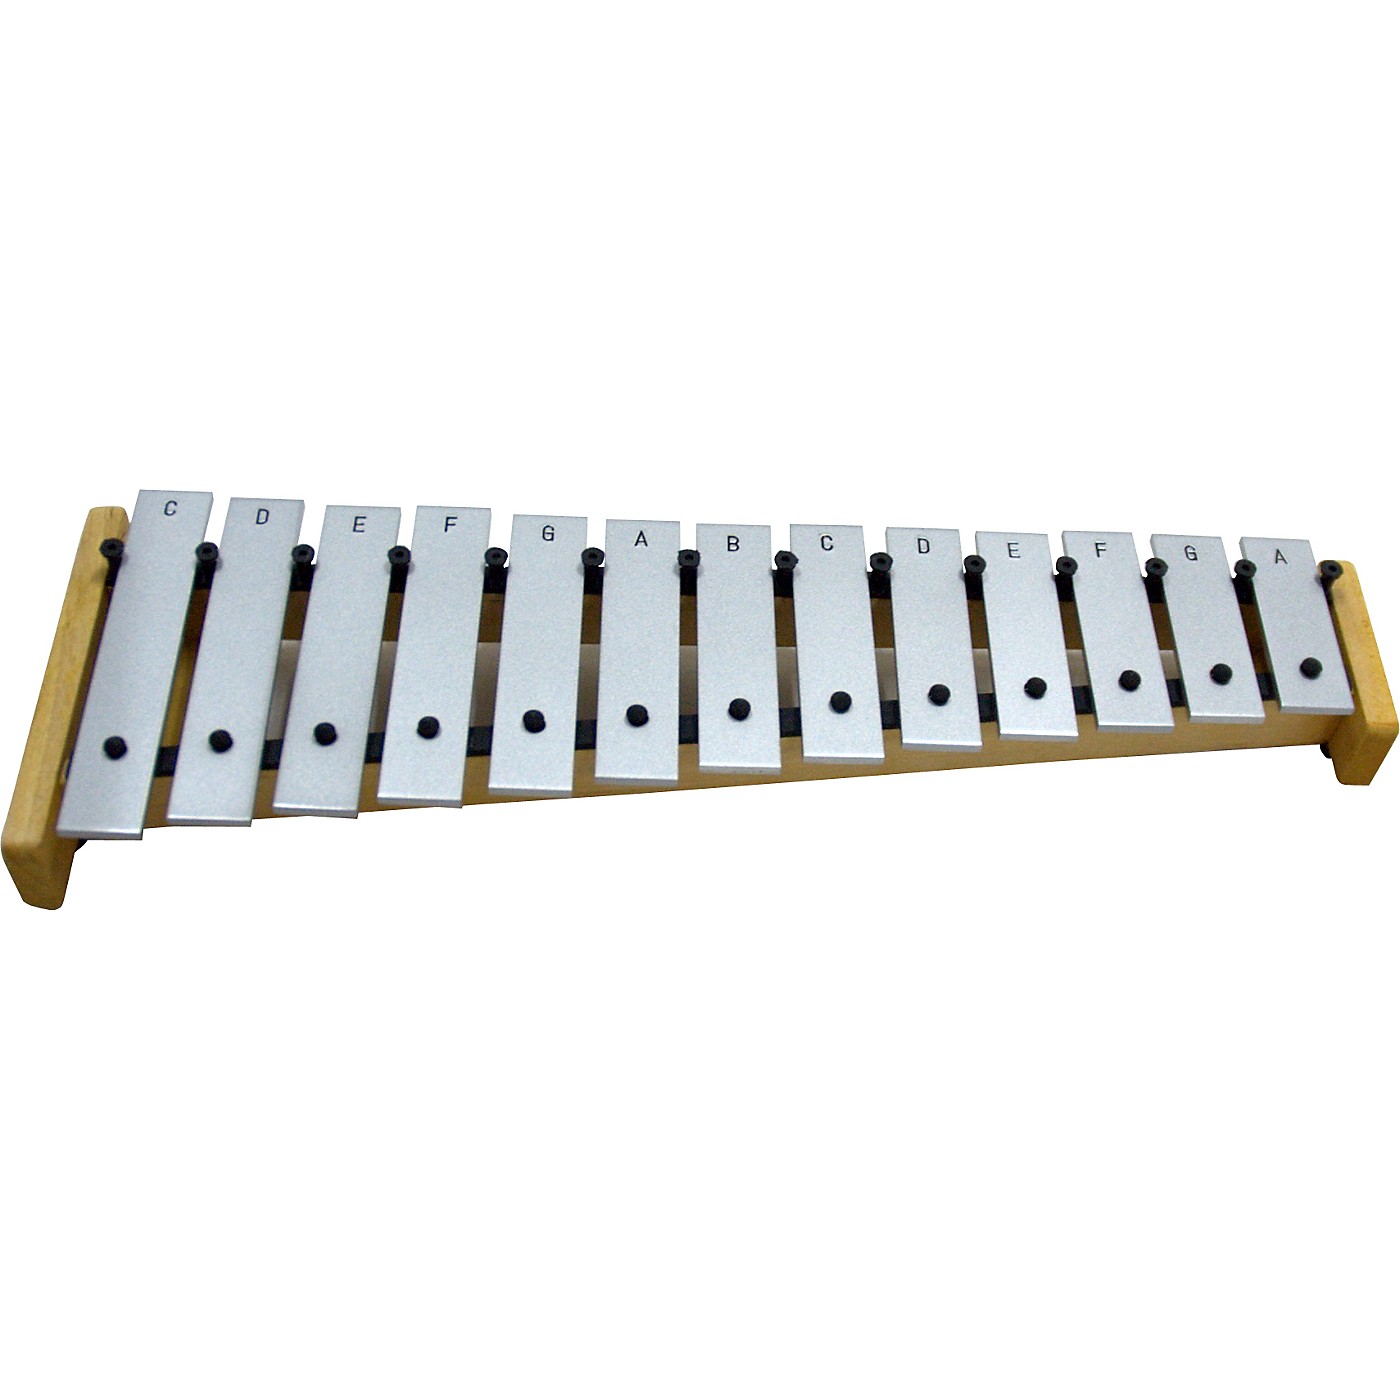 Suzuki Soprano Glockenspiel thumbnail